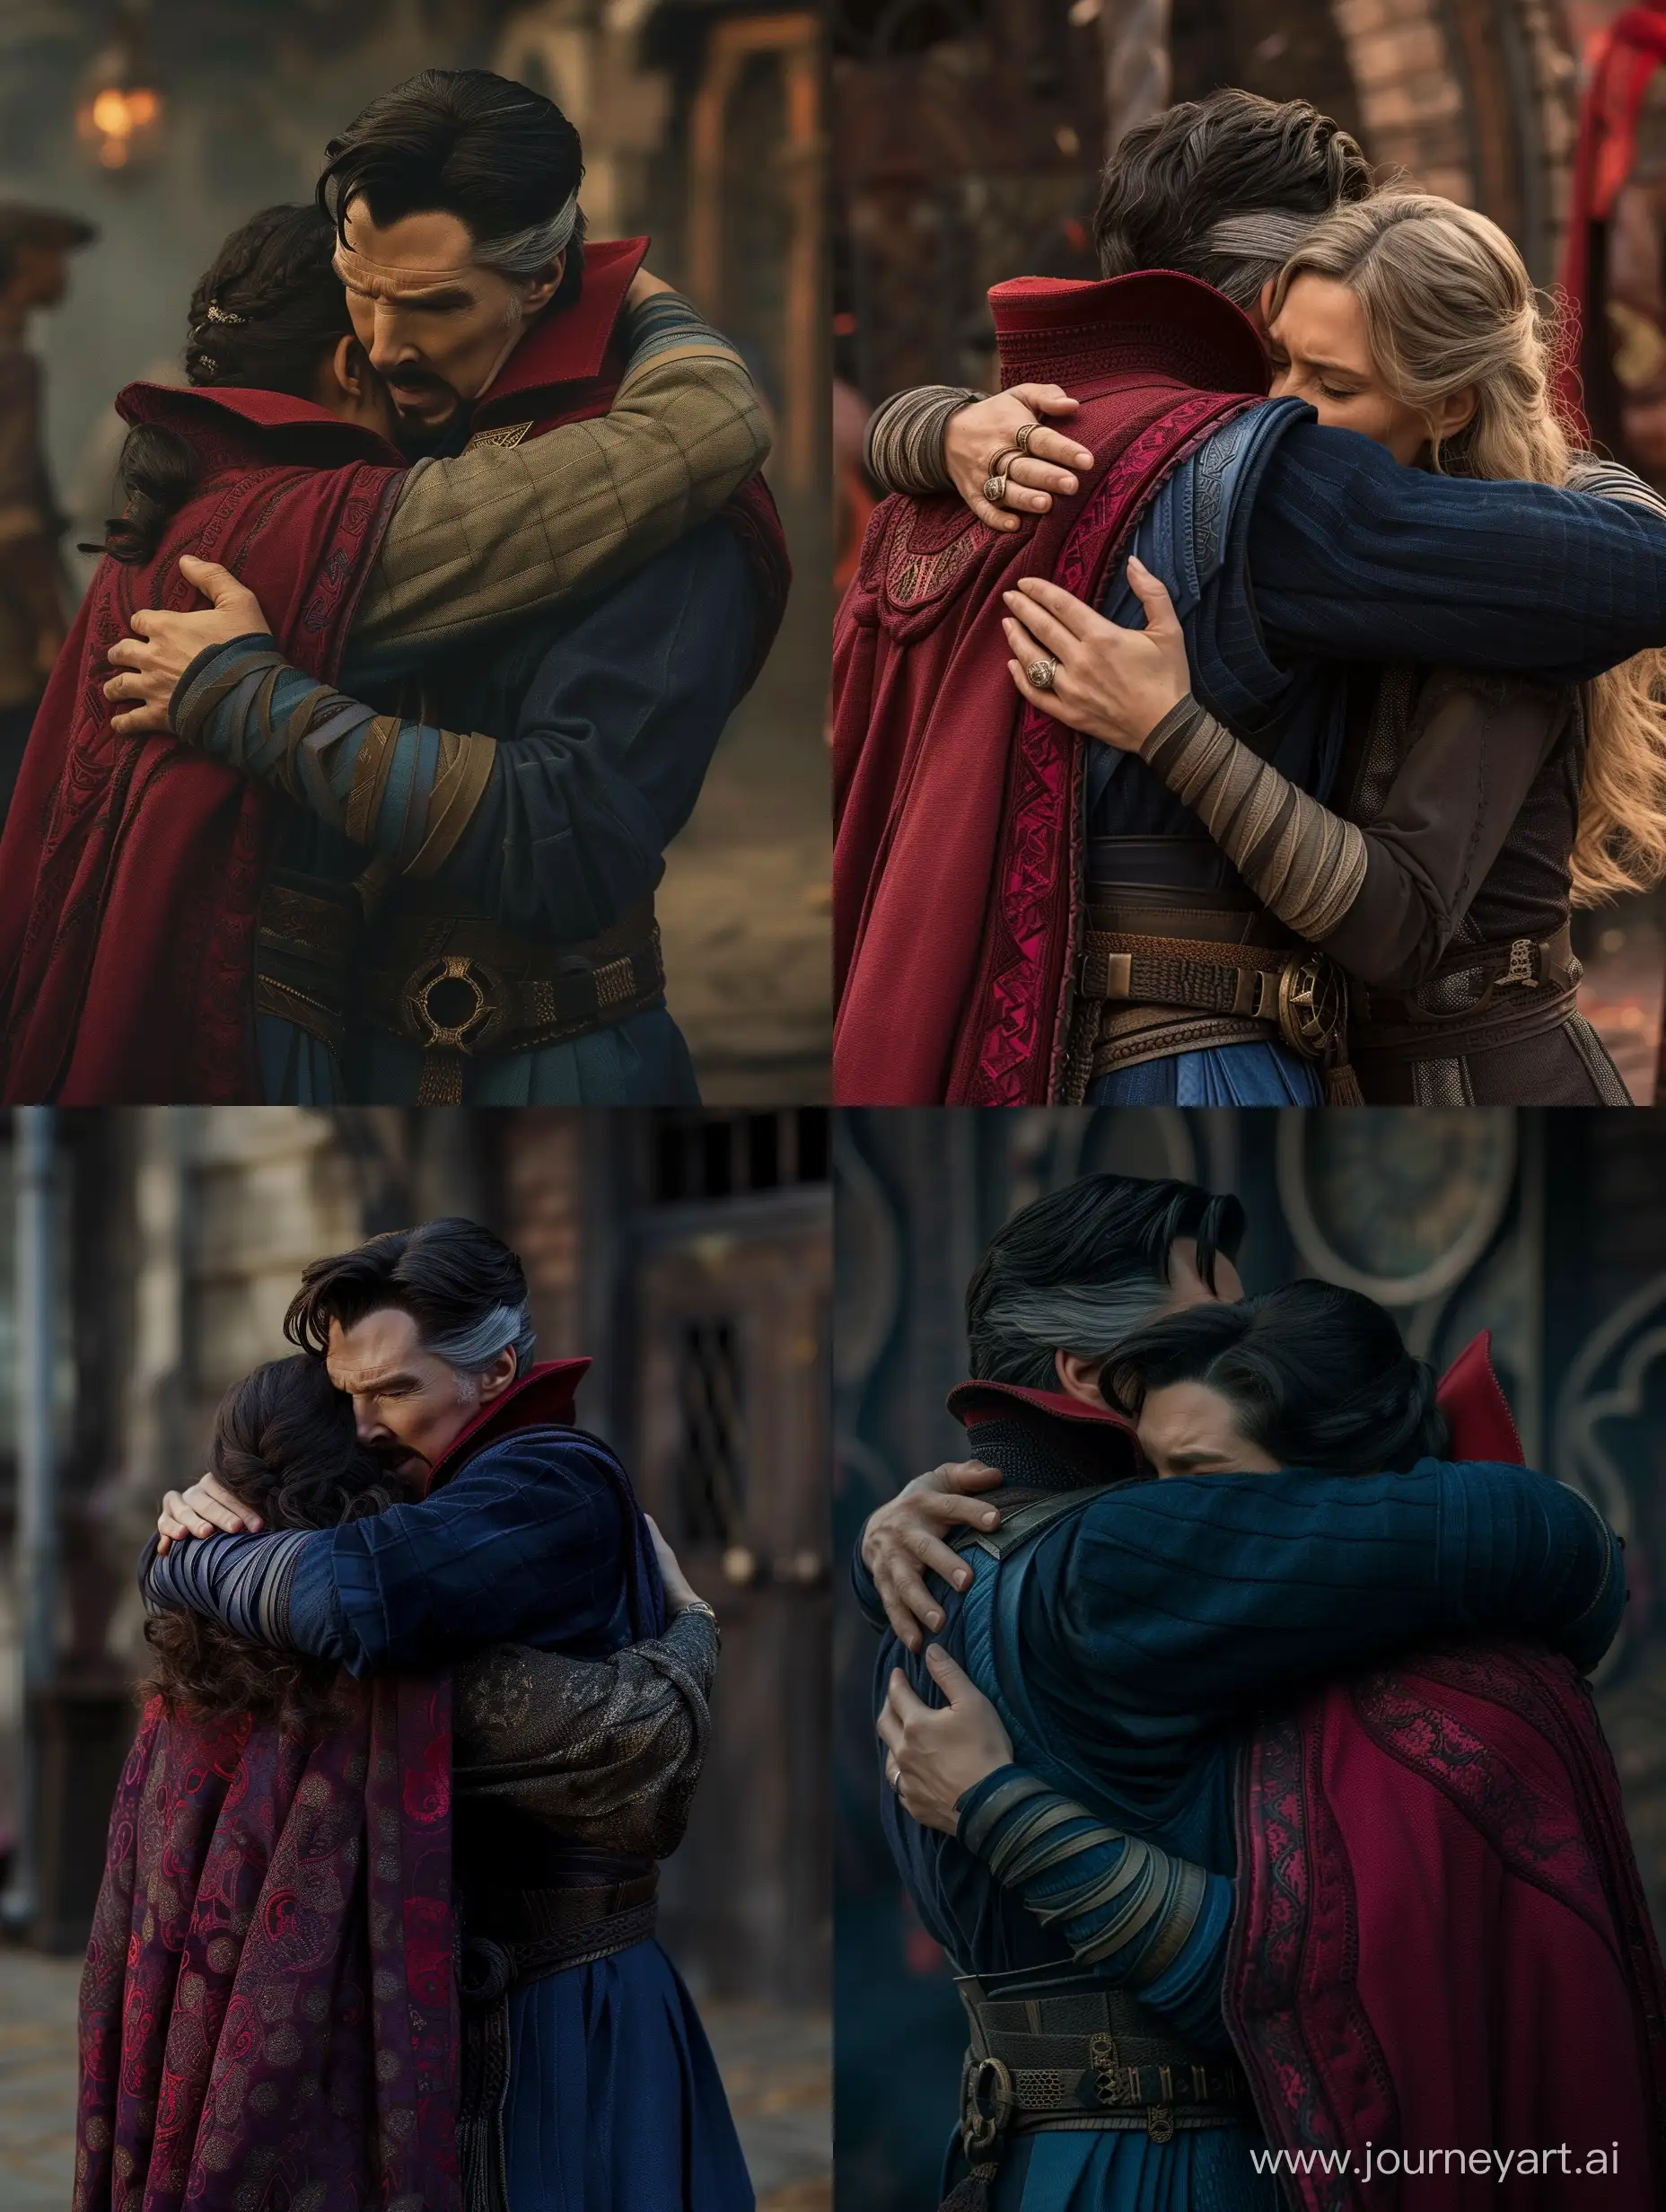 Doctor Strange hugging a woman